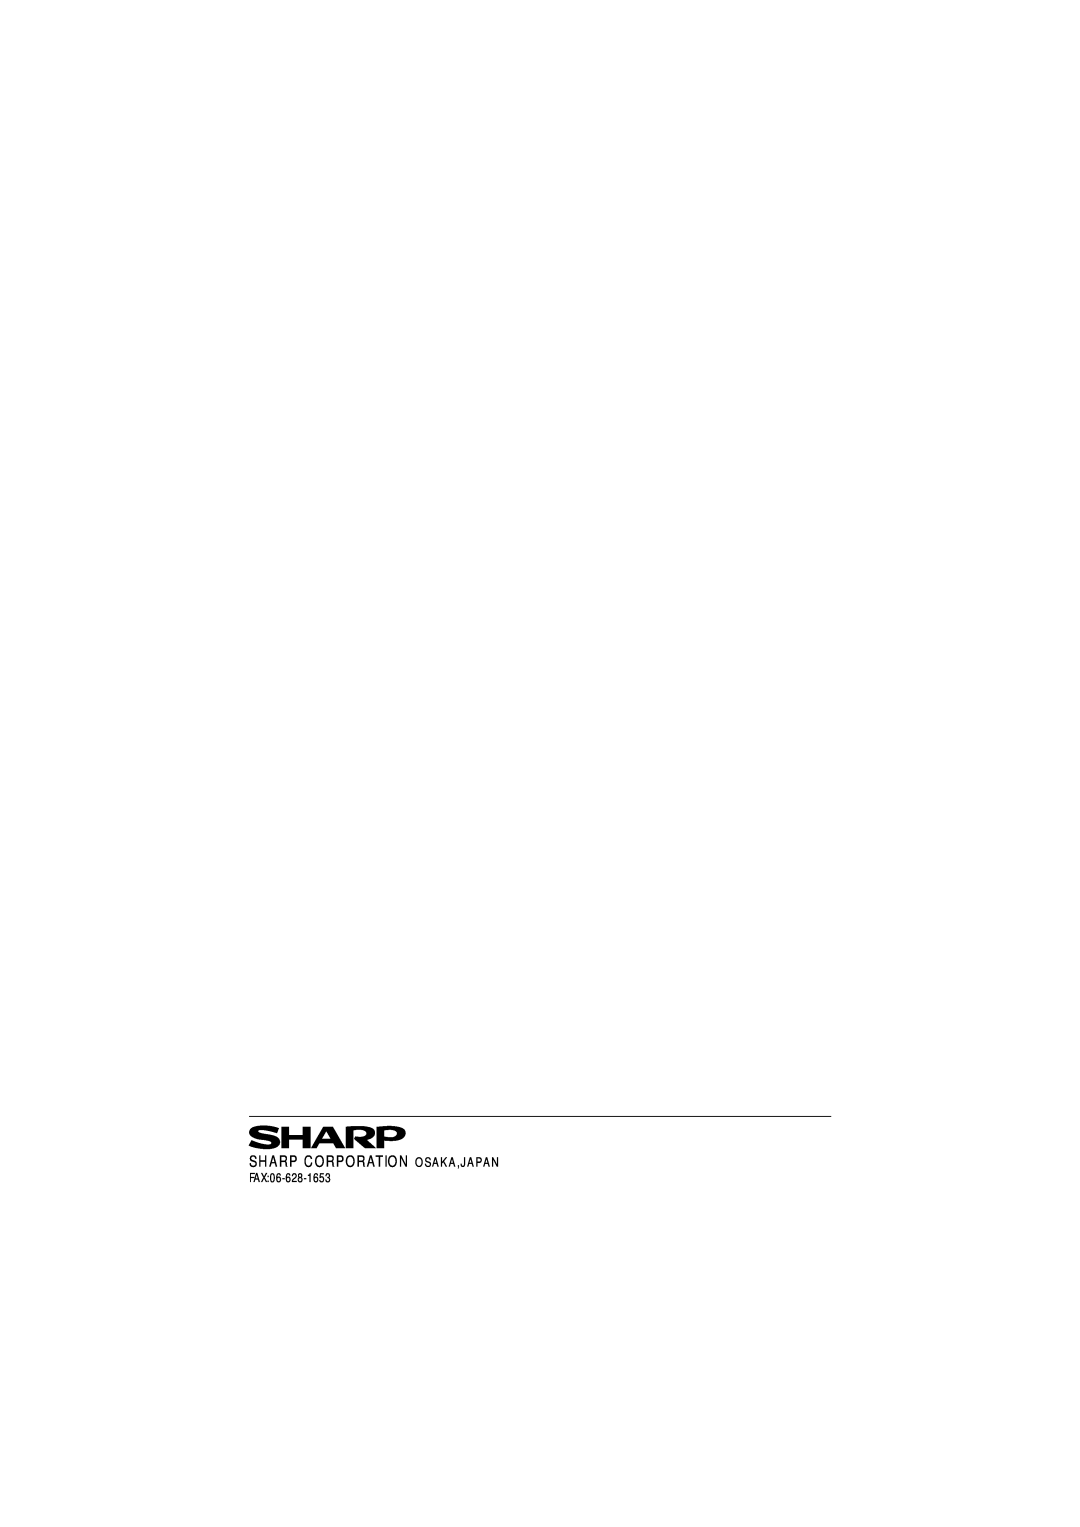 Sharp EL-9400, EL-9600 manual Sharp Corporation Osaka,Japan, FAX06-628-1653 